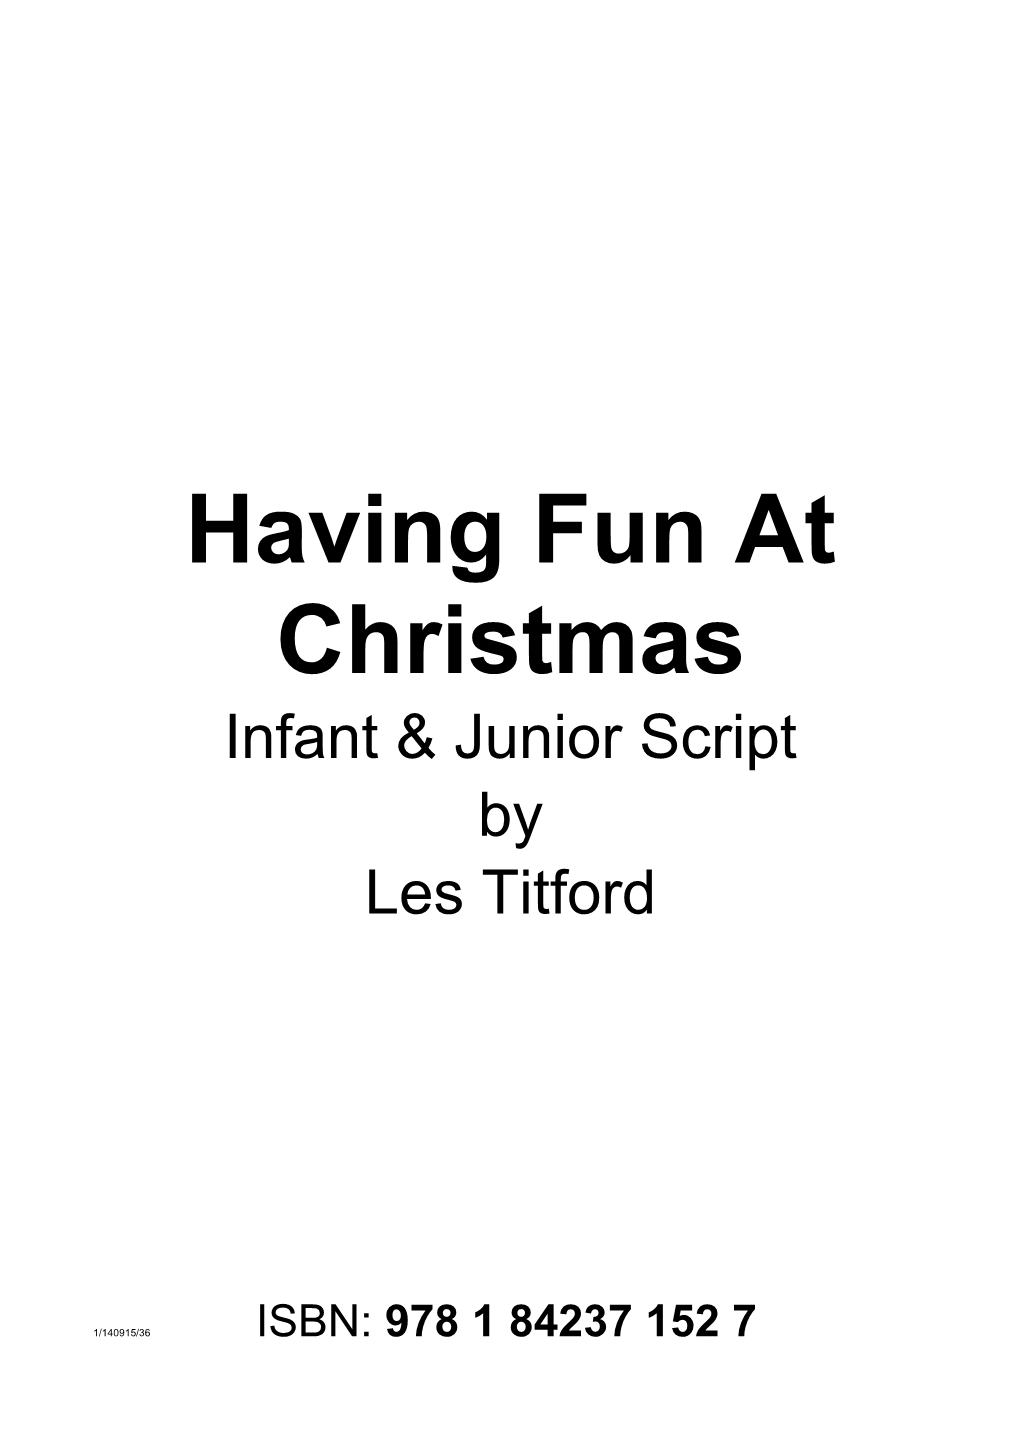 Having Fun at Christmas Infant & Junior Script by Les Titford